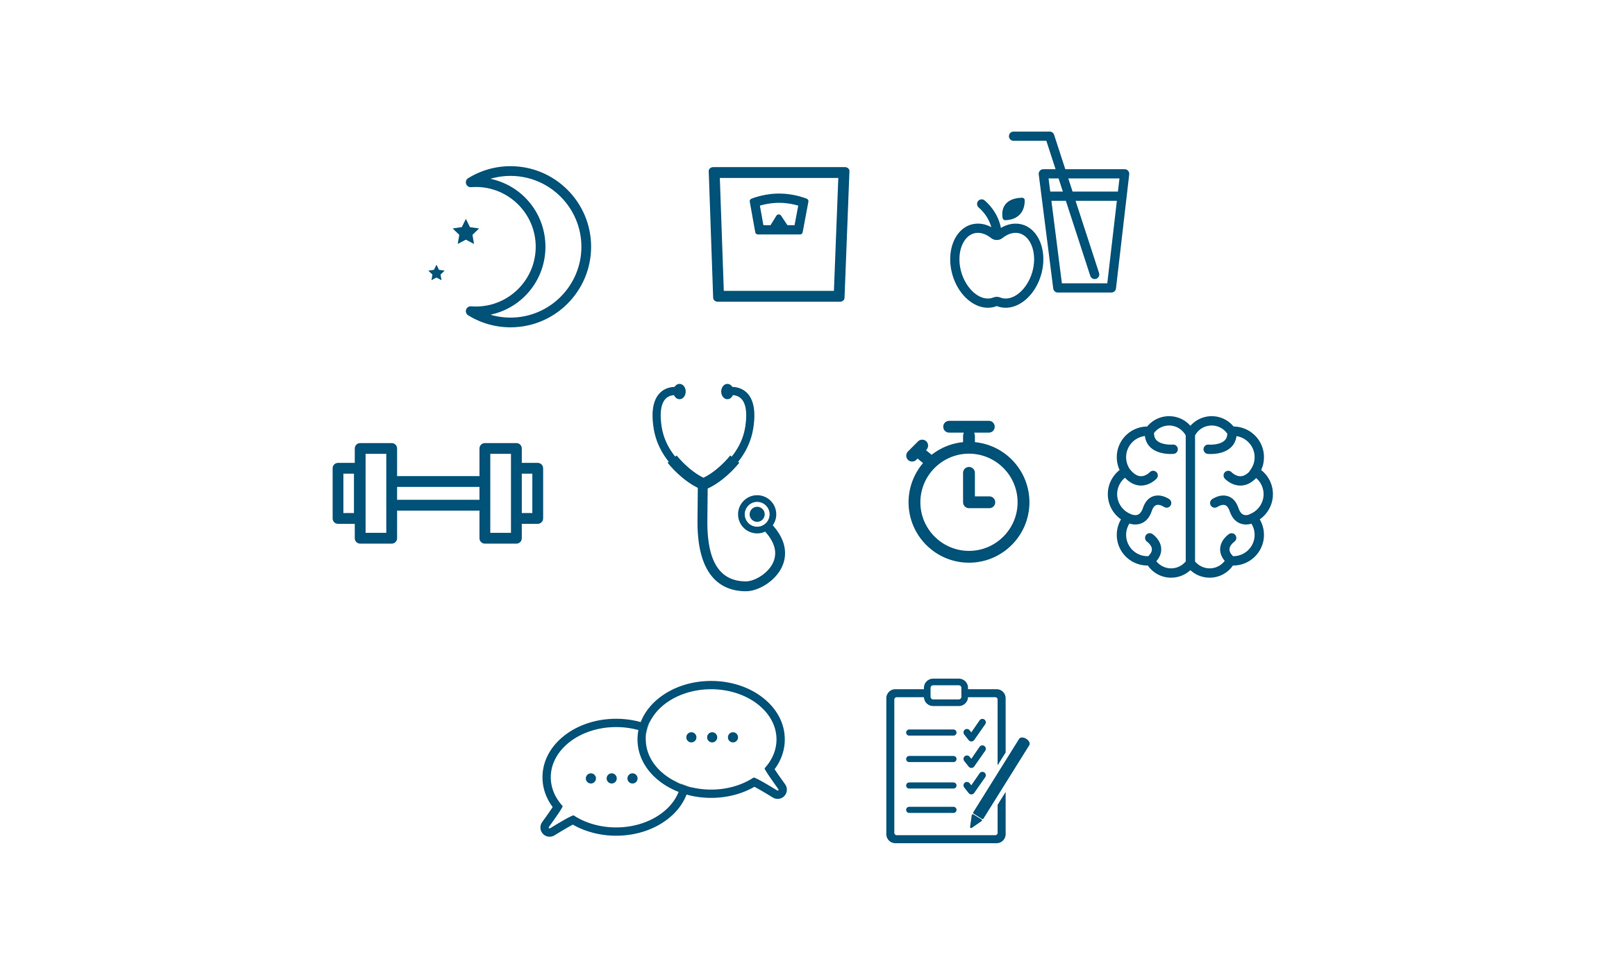 asekvi - sport, medical and health icons set design